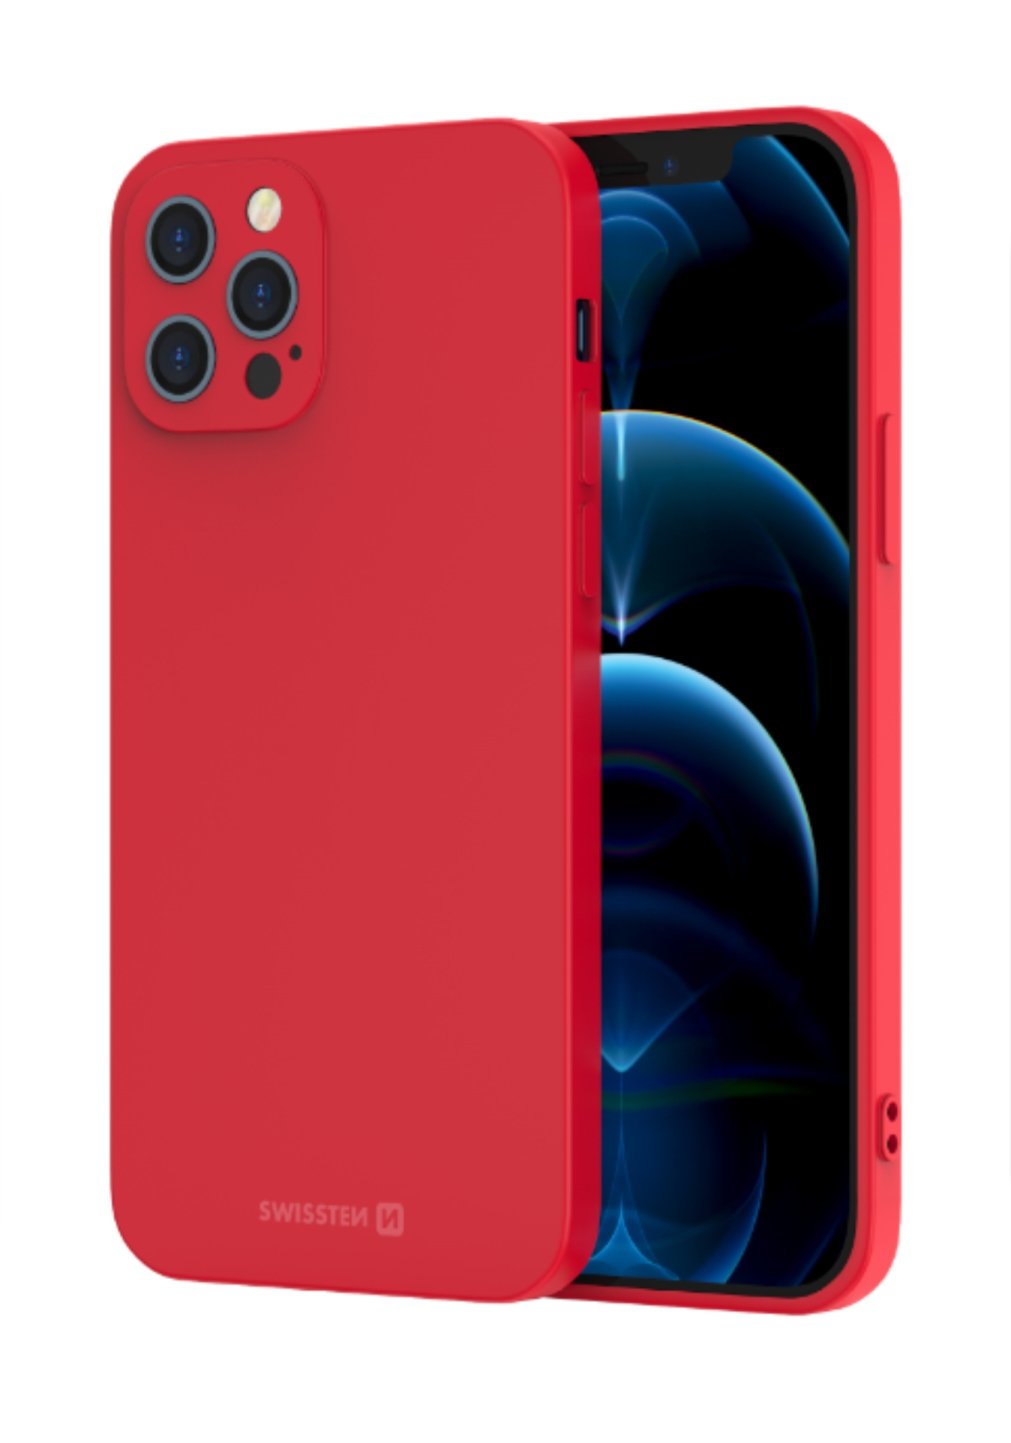 Swissten iPhone 11 Soft Joy Case - 34500118 - Red